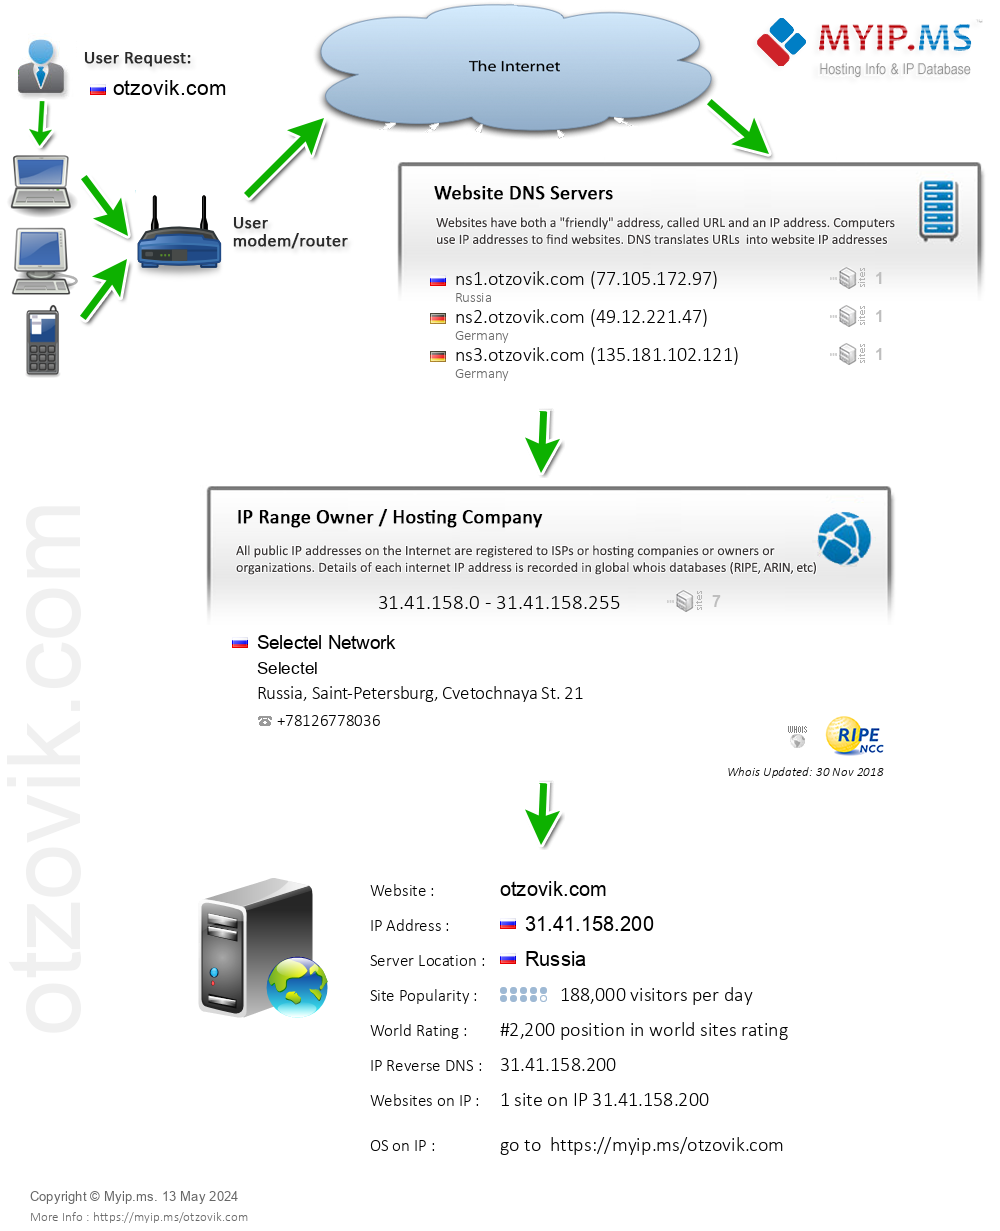 Otzovik.com - Website Hosting Visual IP Diagram